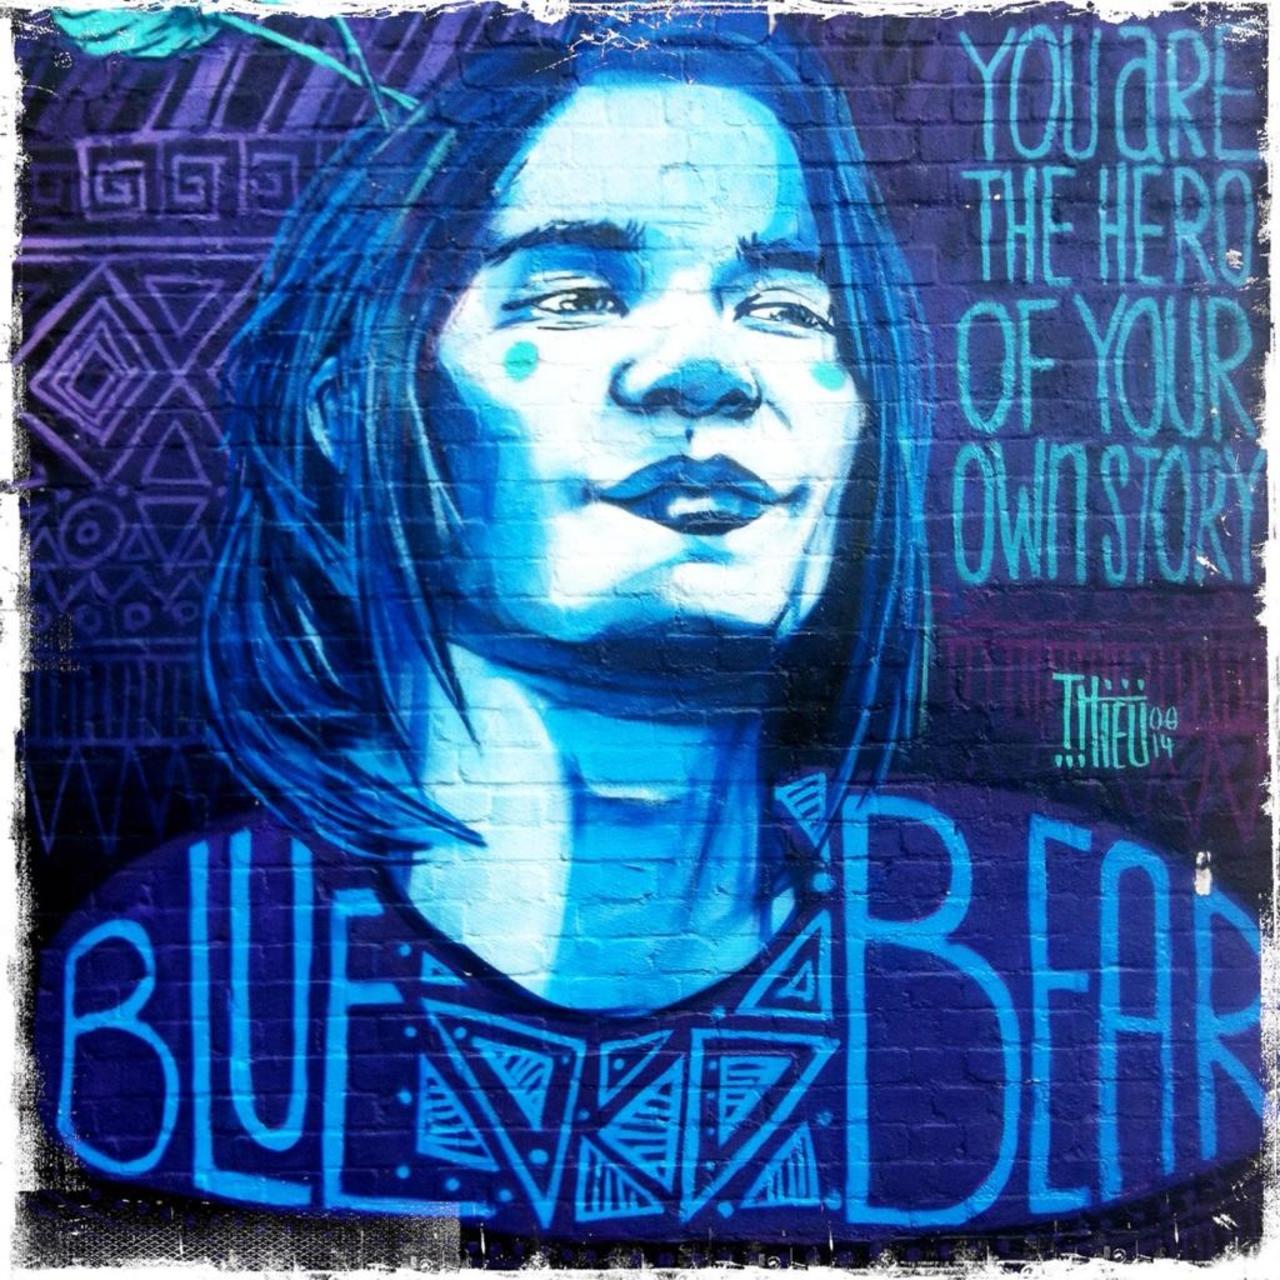 Blue Bear | fabulous streetart thanks to @Thieu_Design in Camden.

#art #graffiti http://t.co/y2eeITnbbh